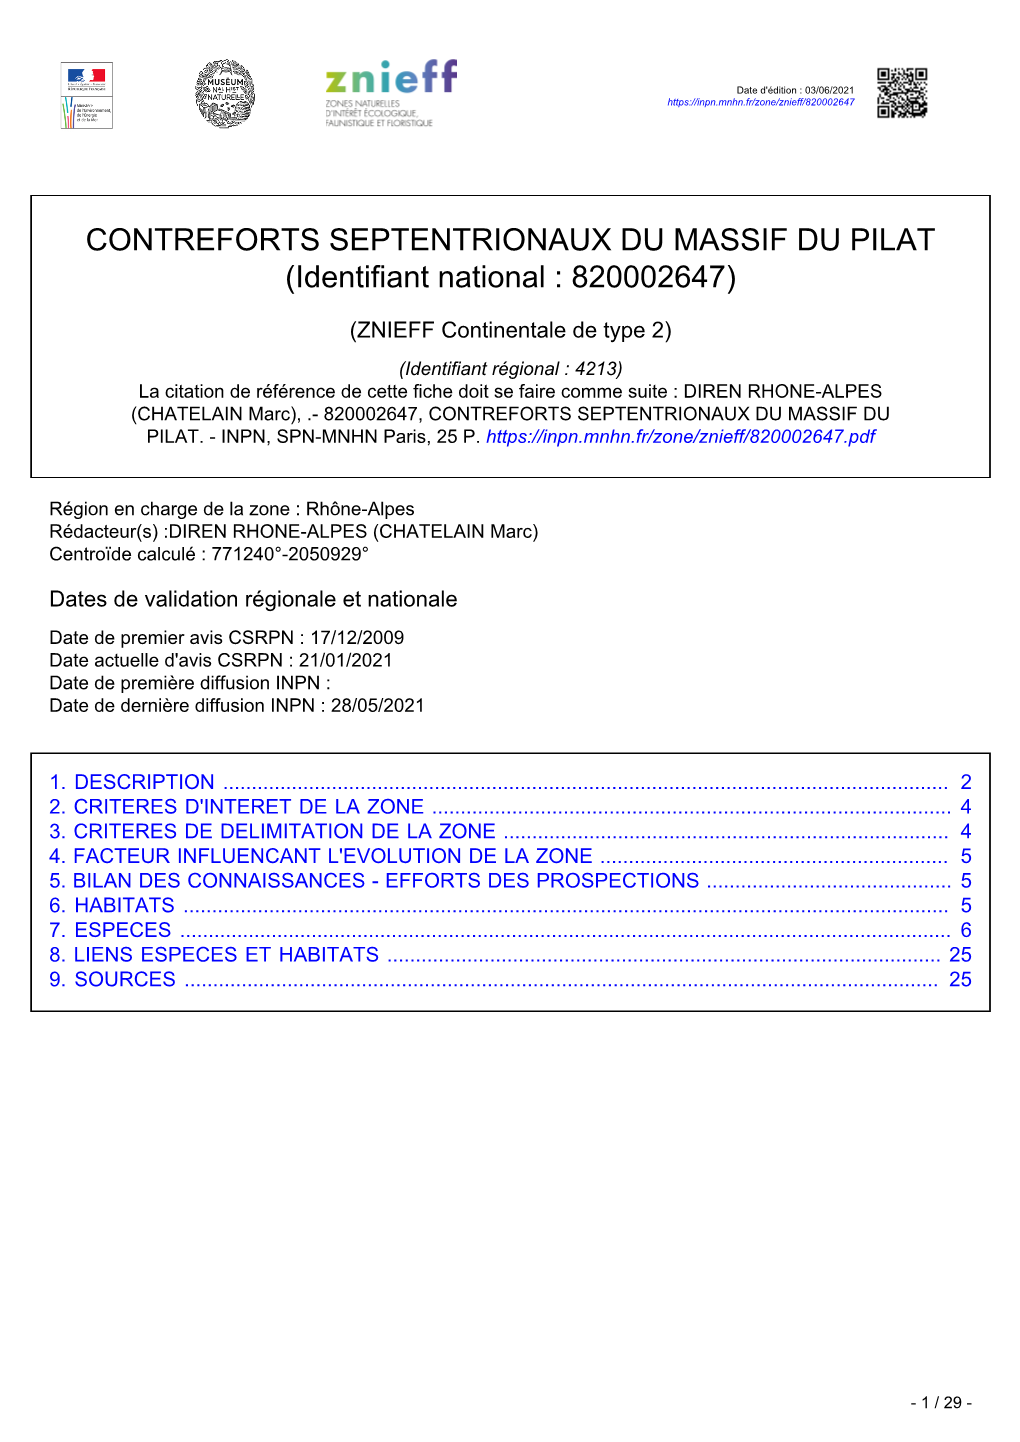 CONTREFORTS SEPTENTRIONAUX DU MASSIF DU PILAT (Identifiant National : 820002647)